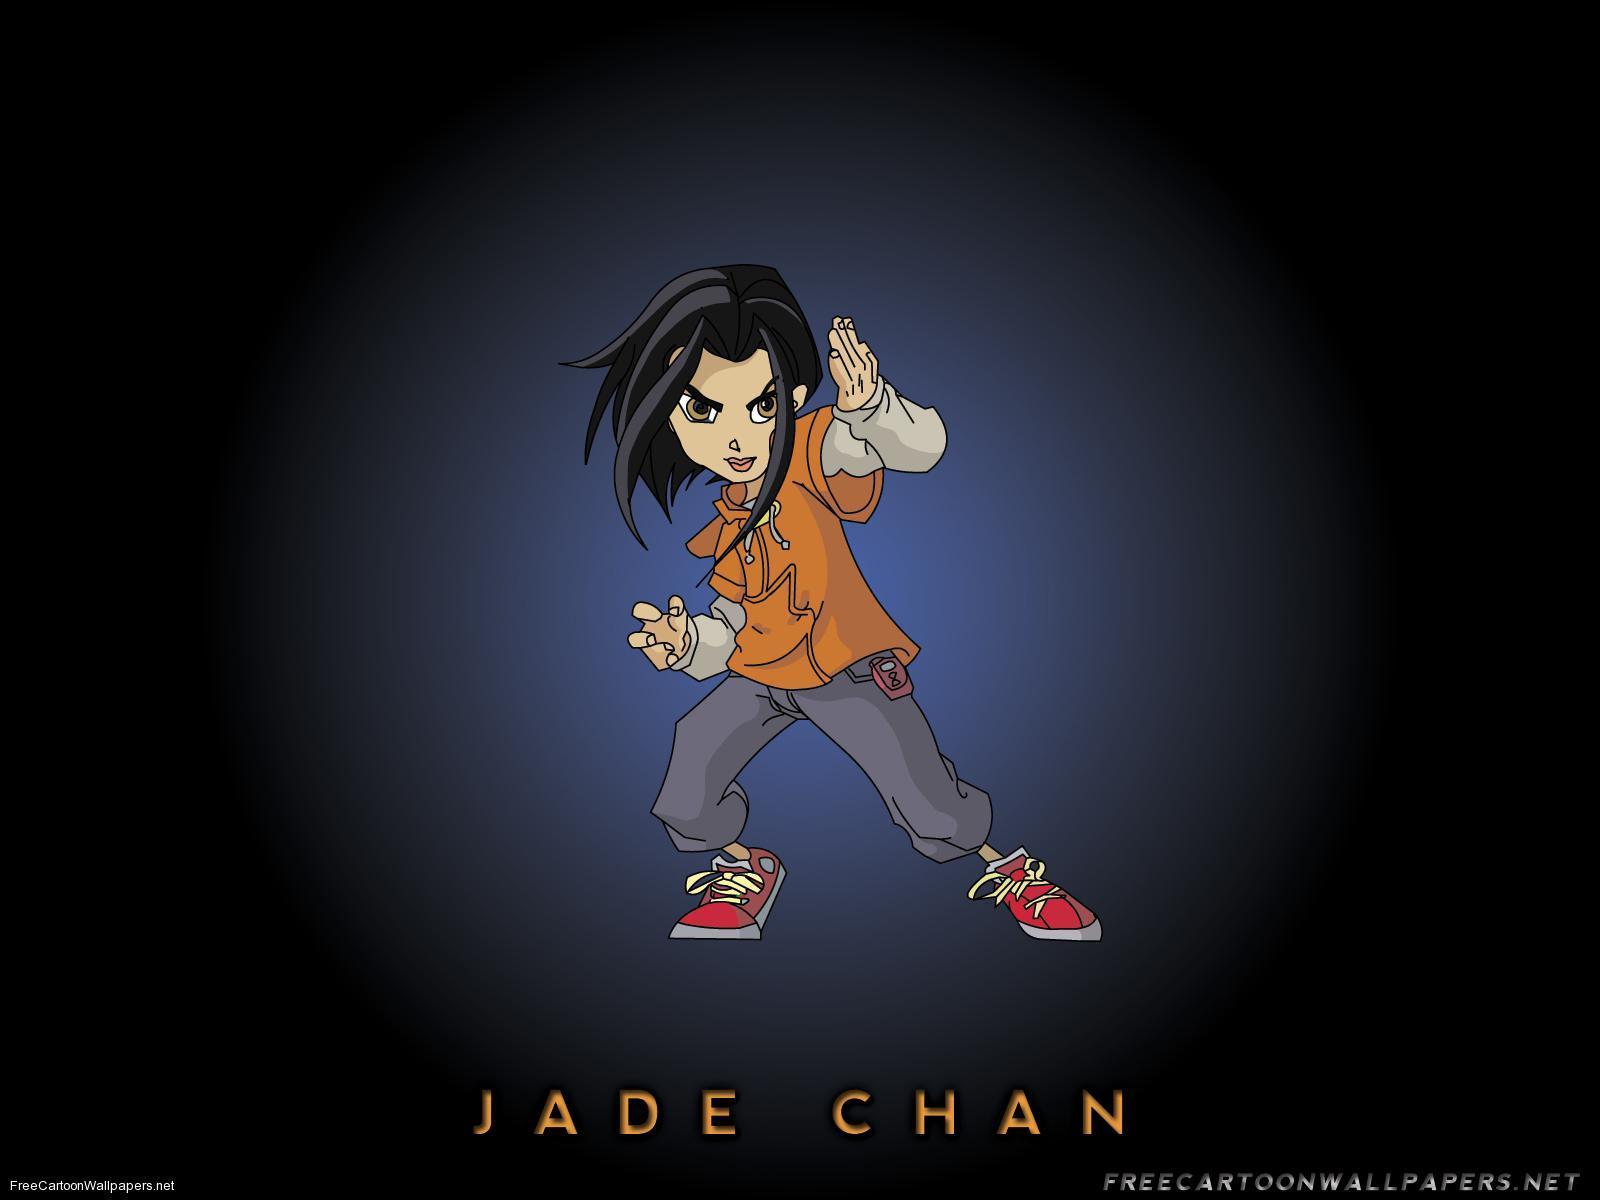 Jade Chan - Jackie Chan Adventures Wallpaper (12351516) - Fanpop